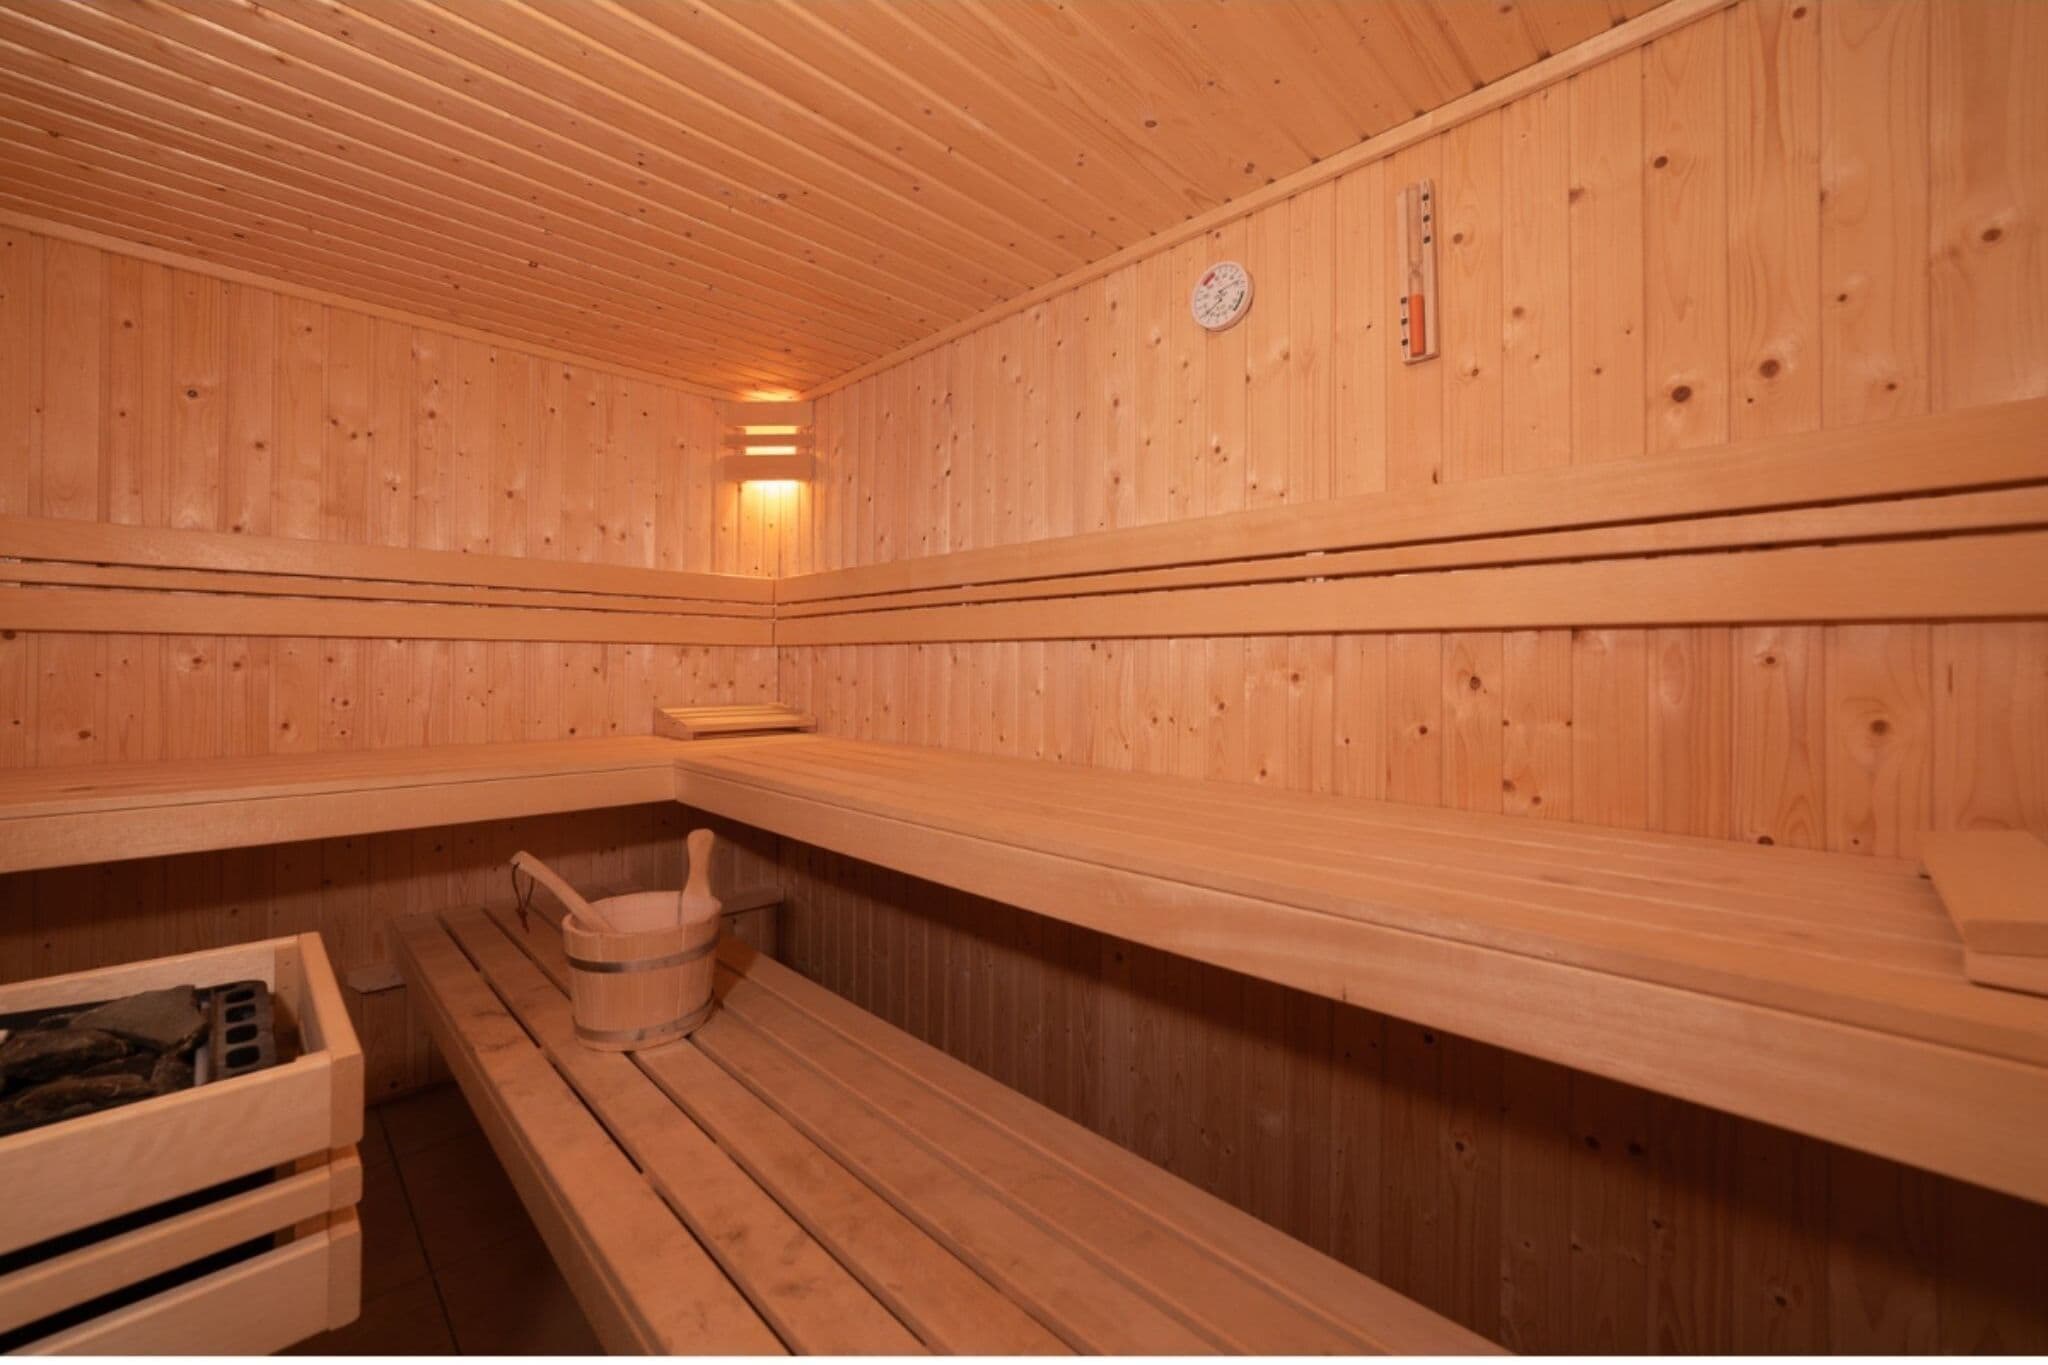 Vacation home with sauna in Zeeland